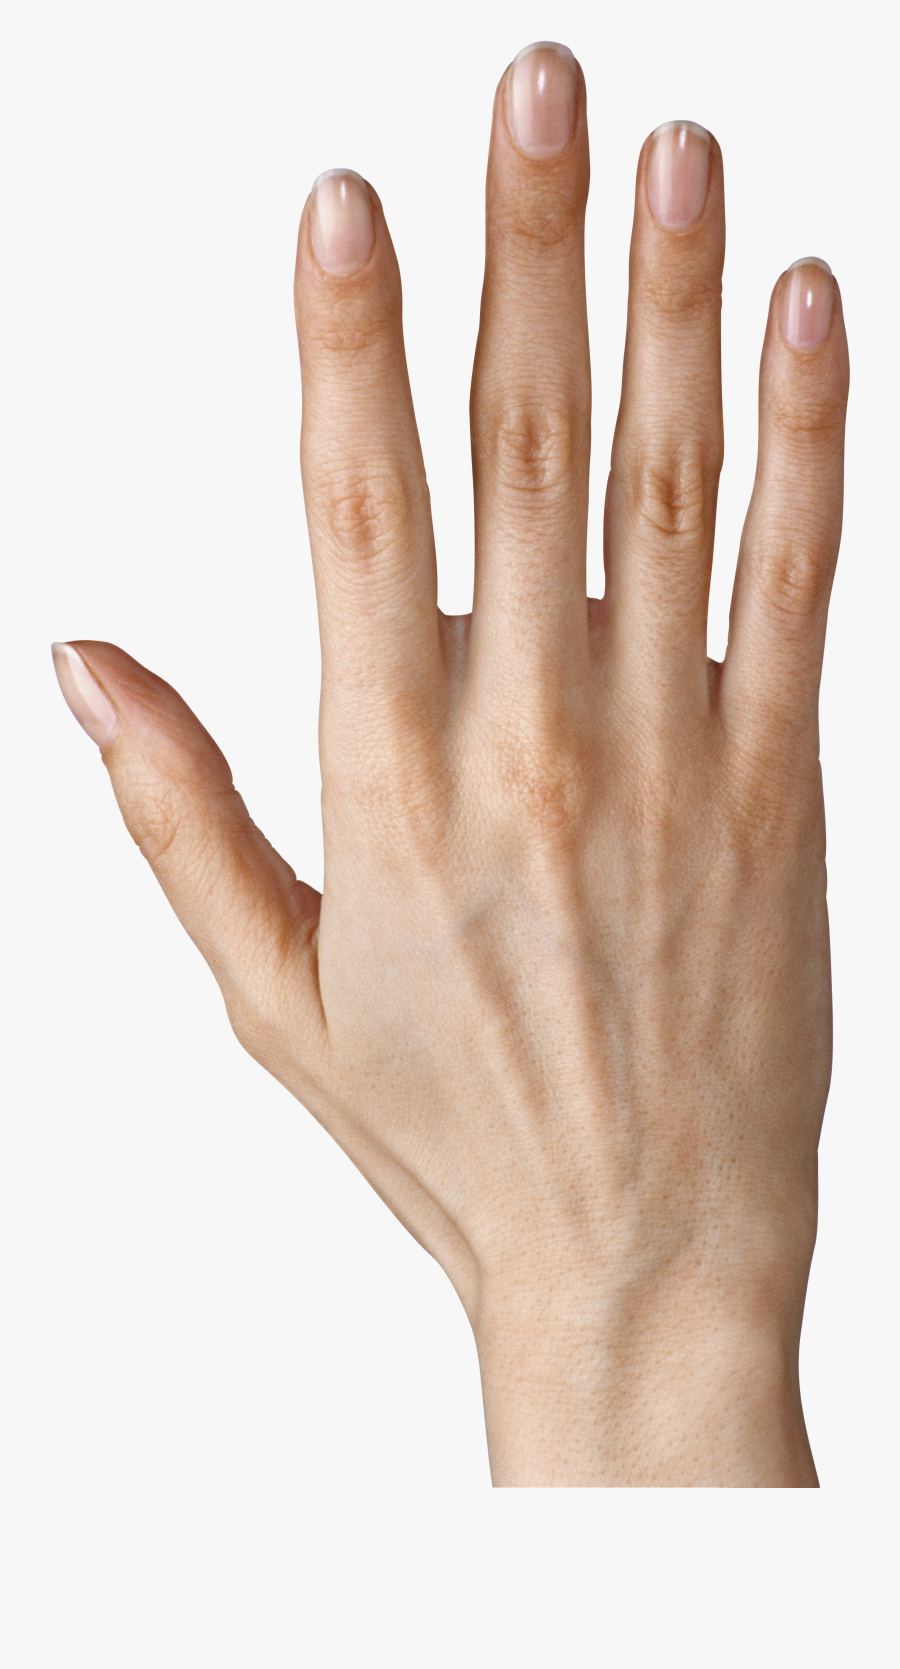 Hand Showing Five Fingers Png Clipart Image - Fingers .png, Transparent Clipart